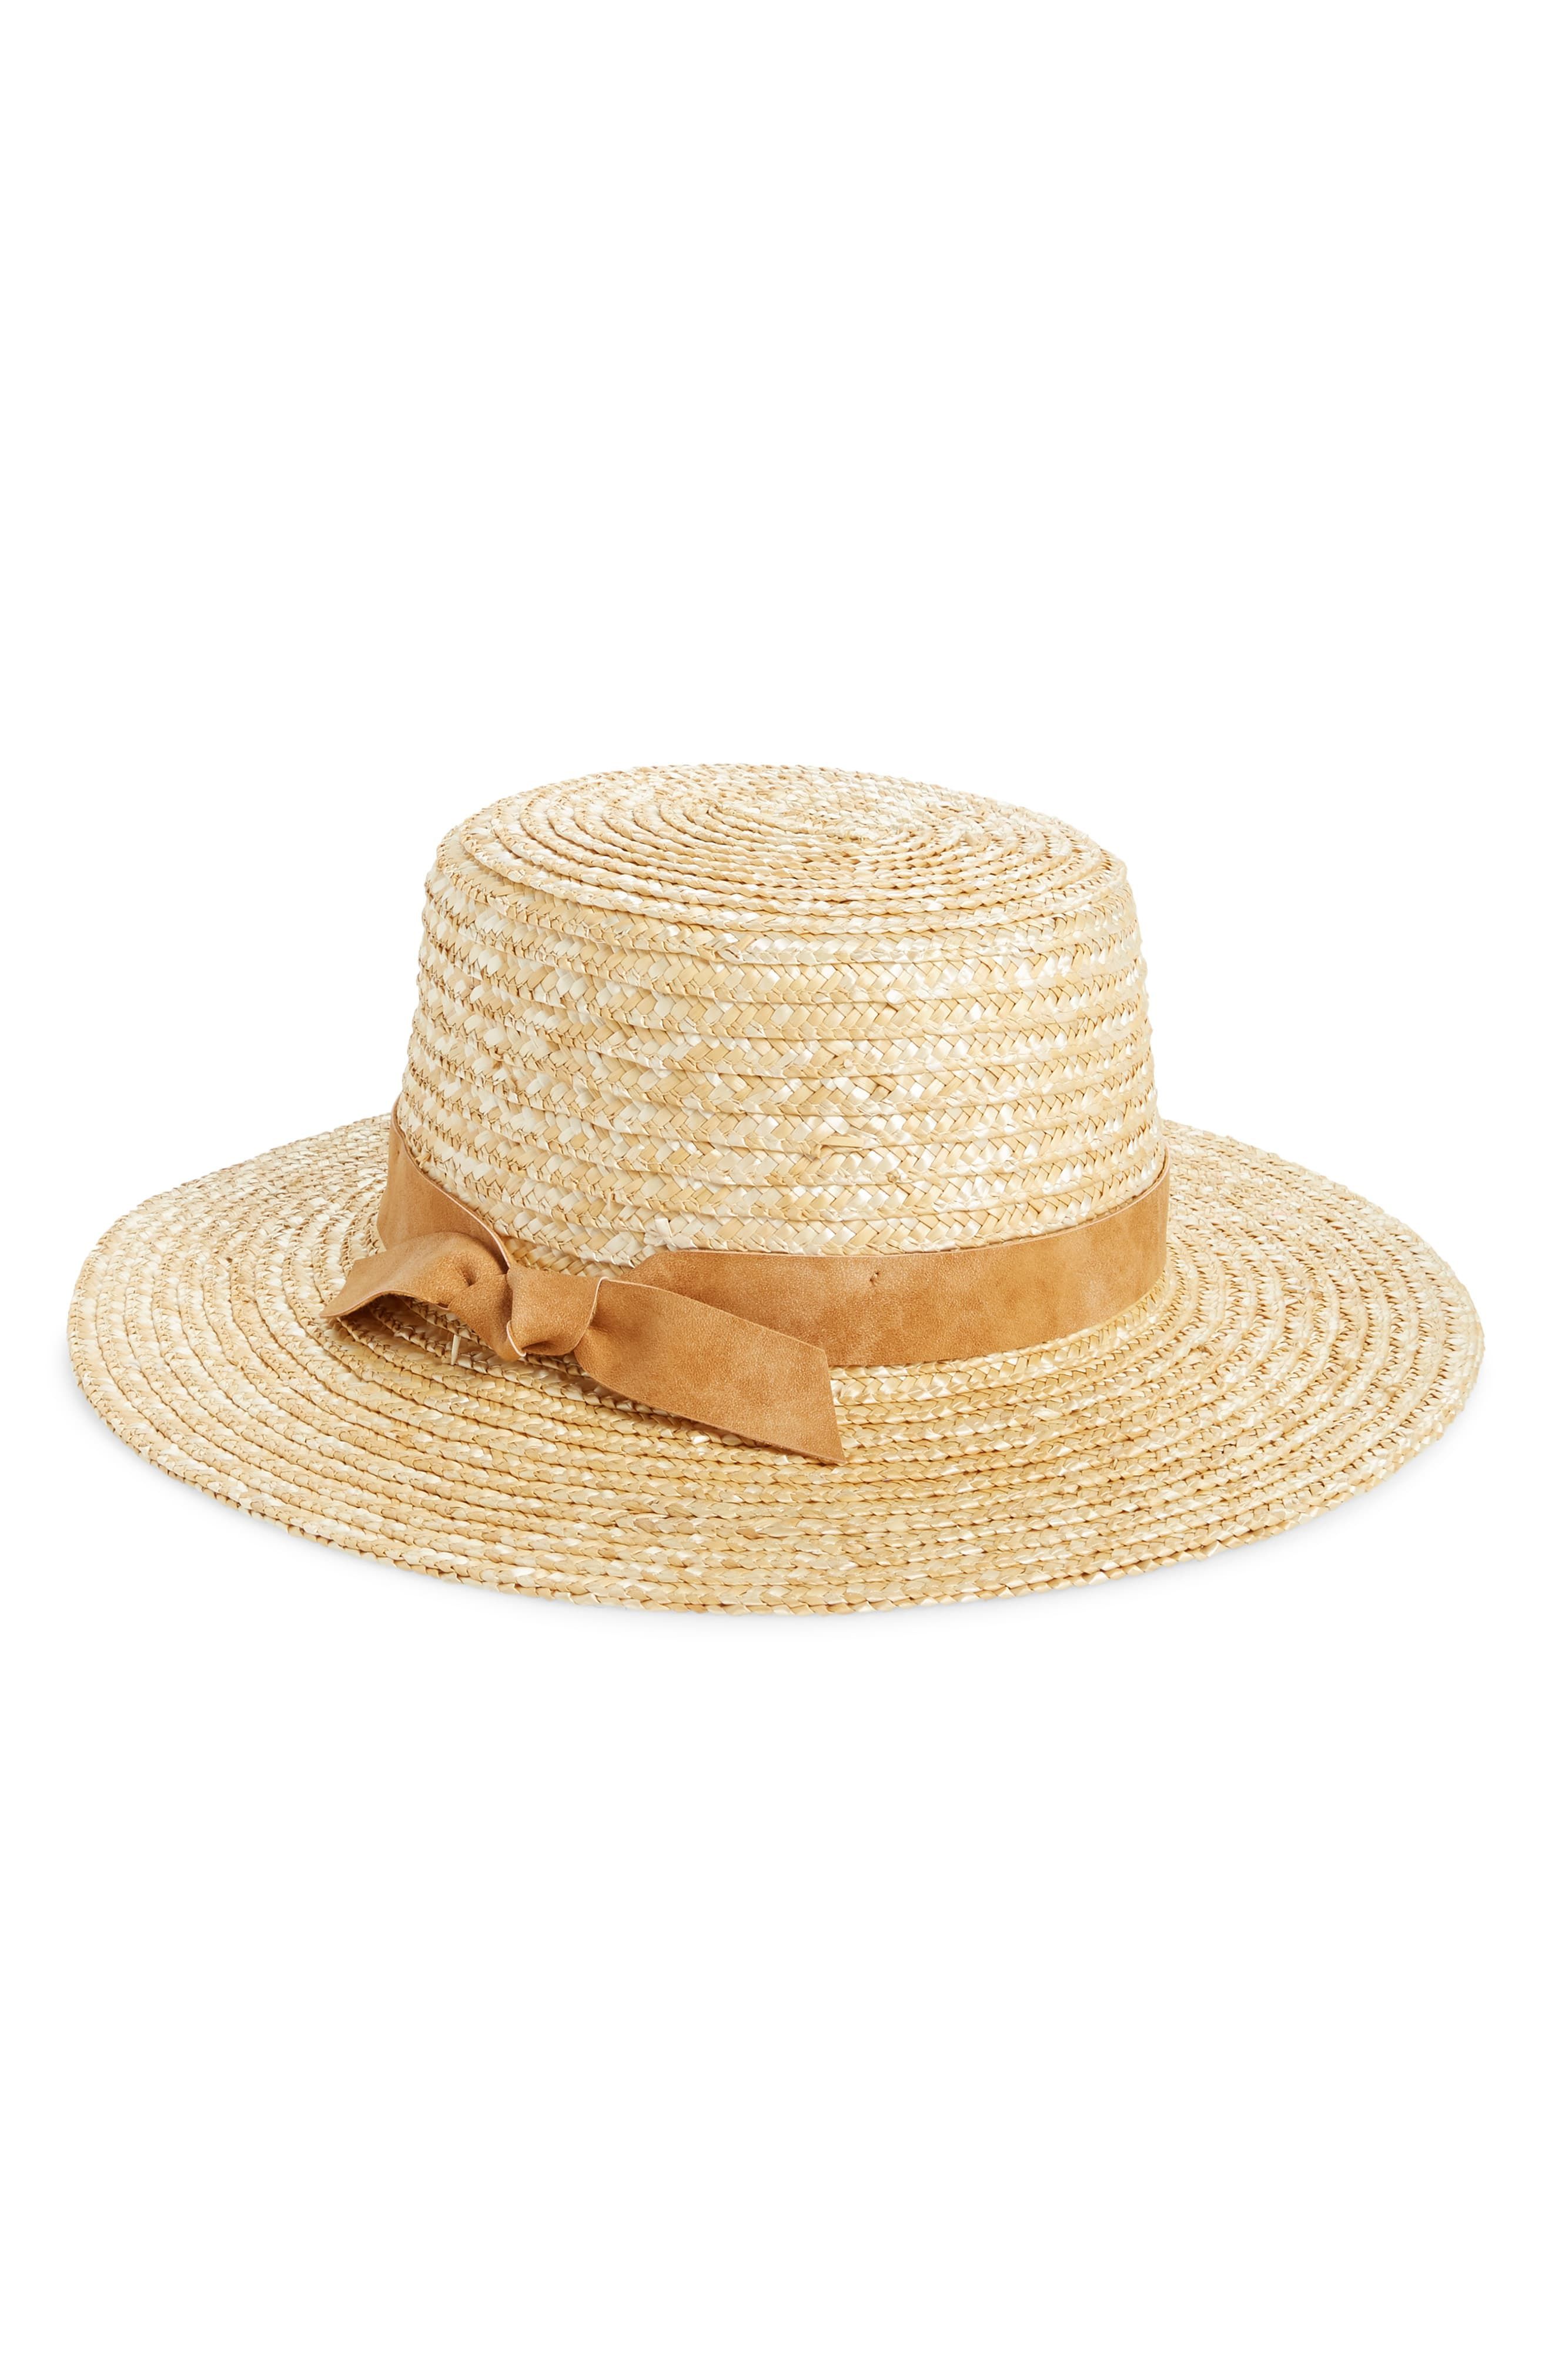 pretty straw hats